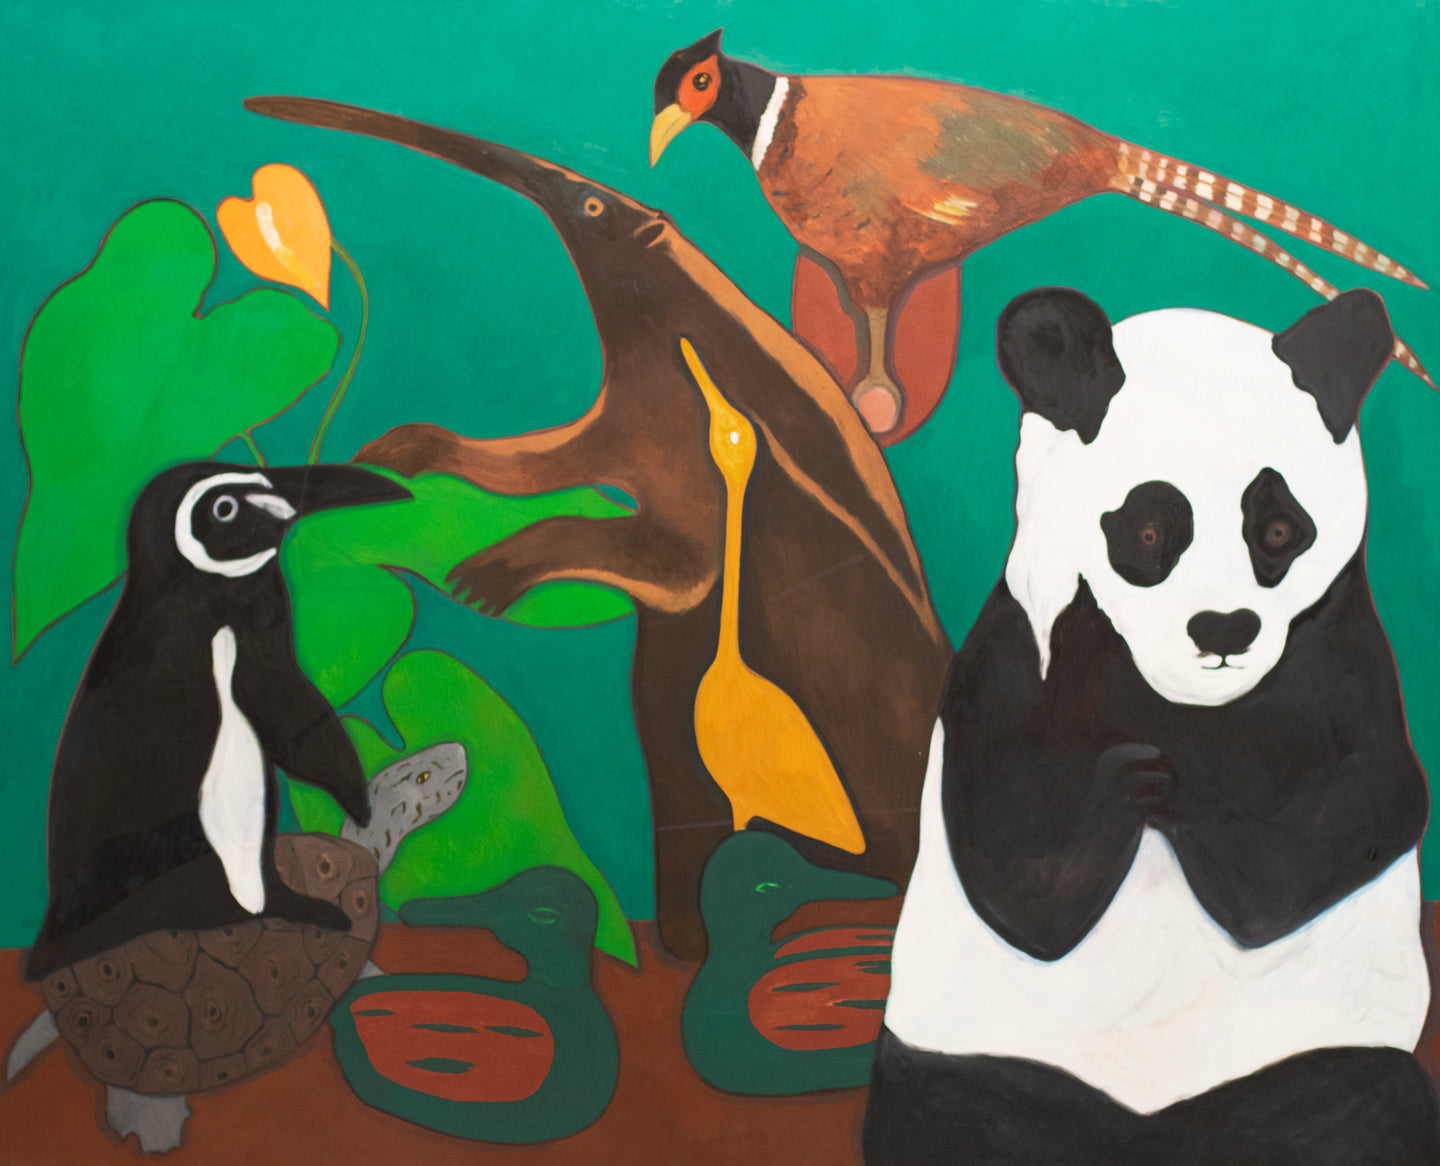 Hunt Slonem (b. 1951-), Panda, 1980, Oil on canvas, 67 x 56 inches. Hunt Slonem believes that, 